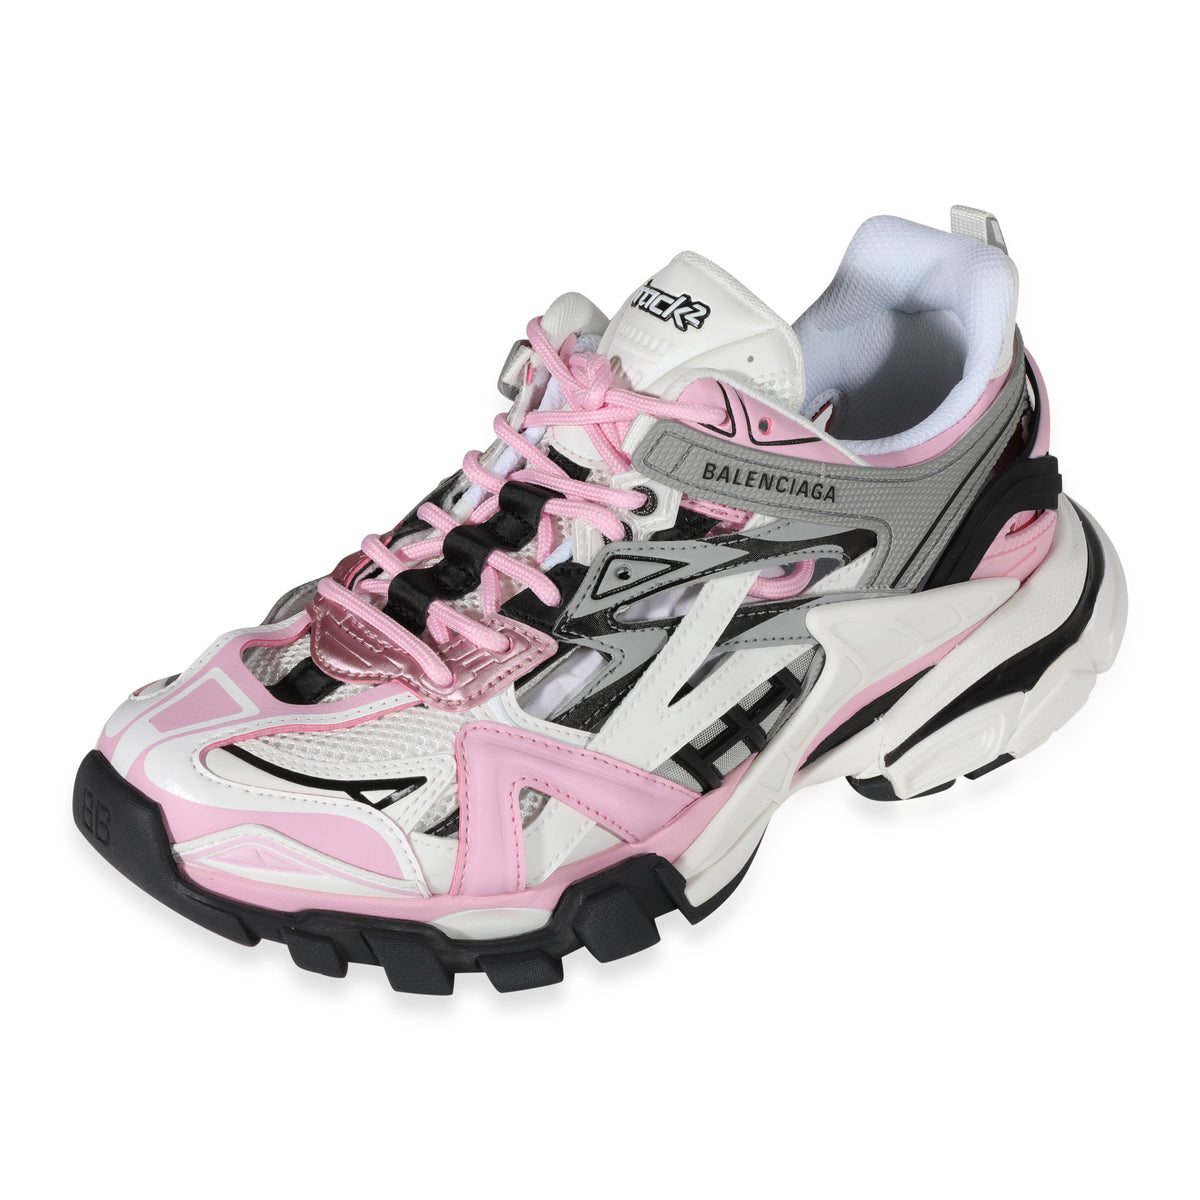 Balenciaga Shoe  Sneakers TRACK2 in pink 909795